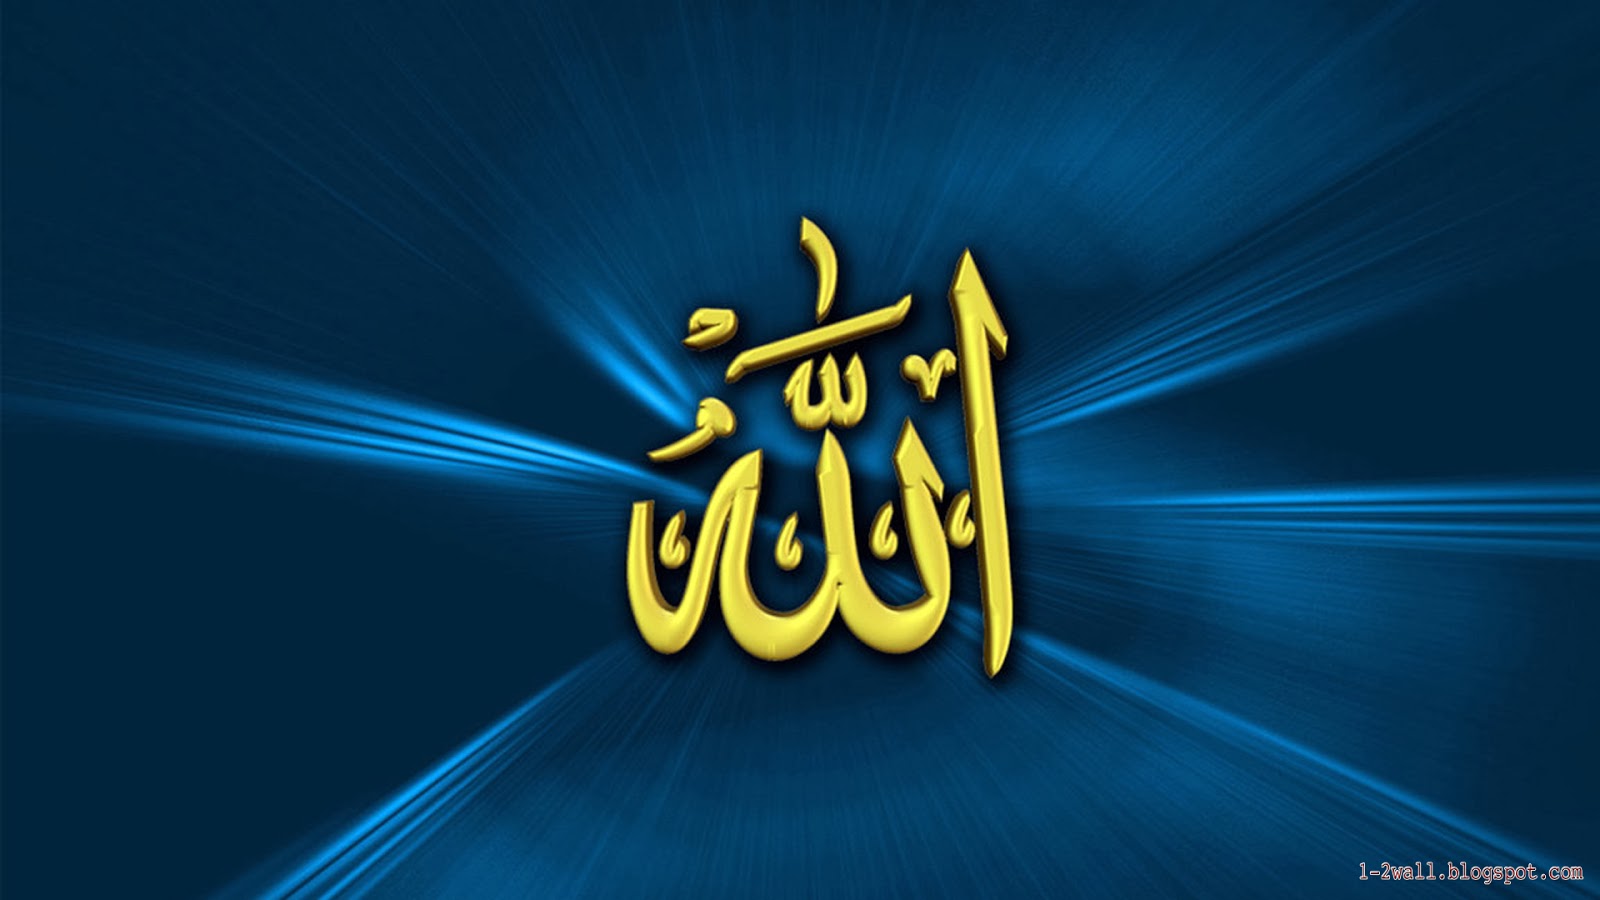 Allah Names HD Wallpapers, Islamic Wallpapers  1-2Wall